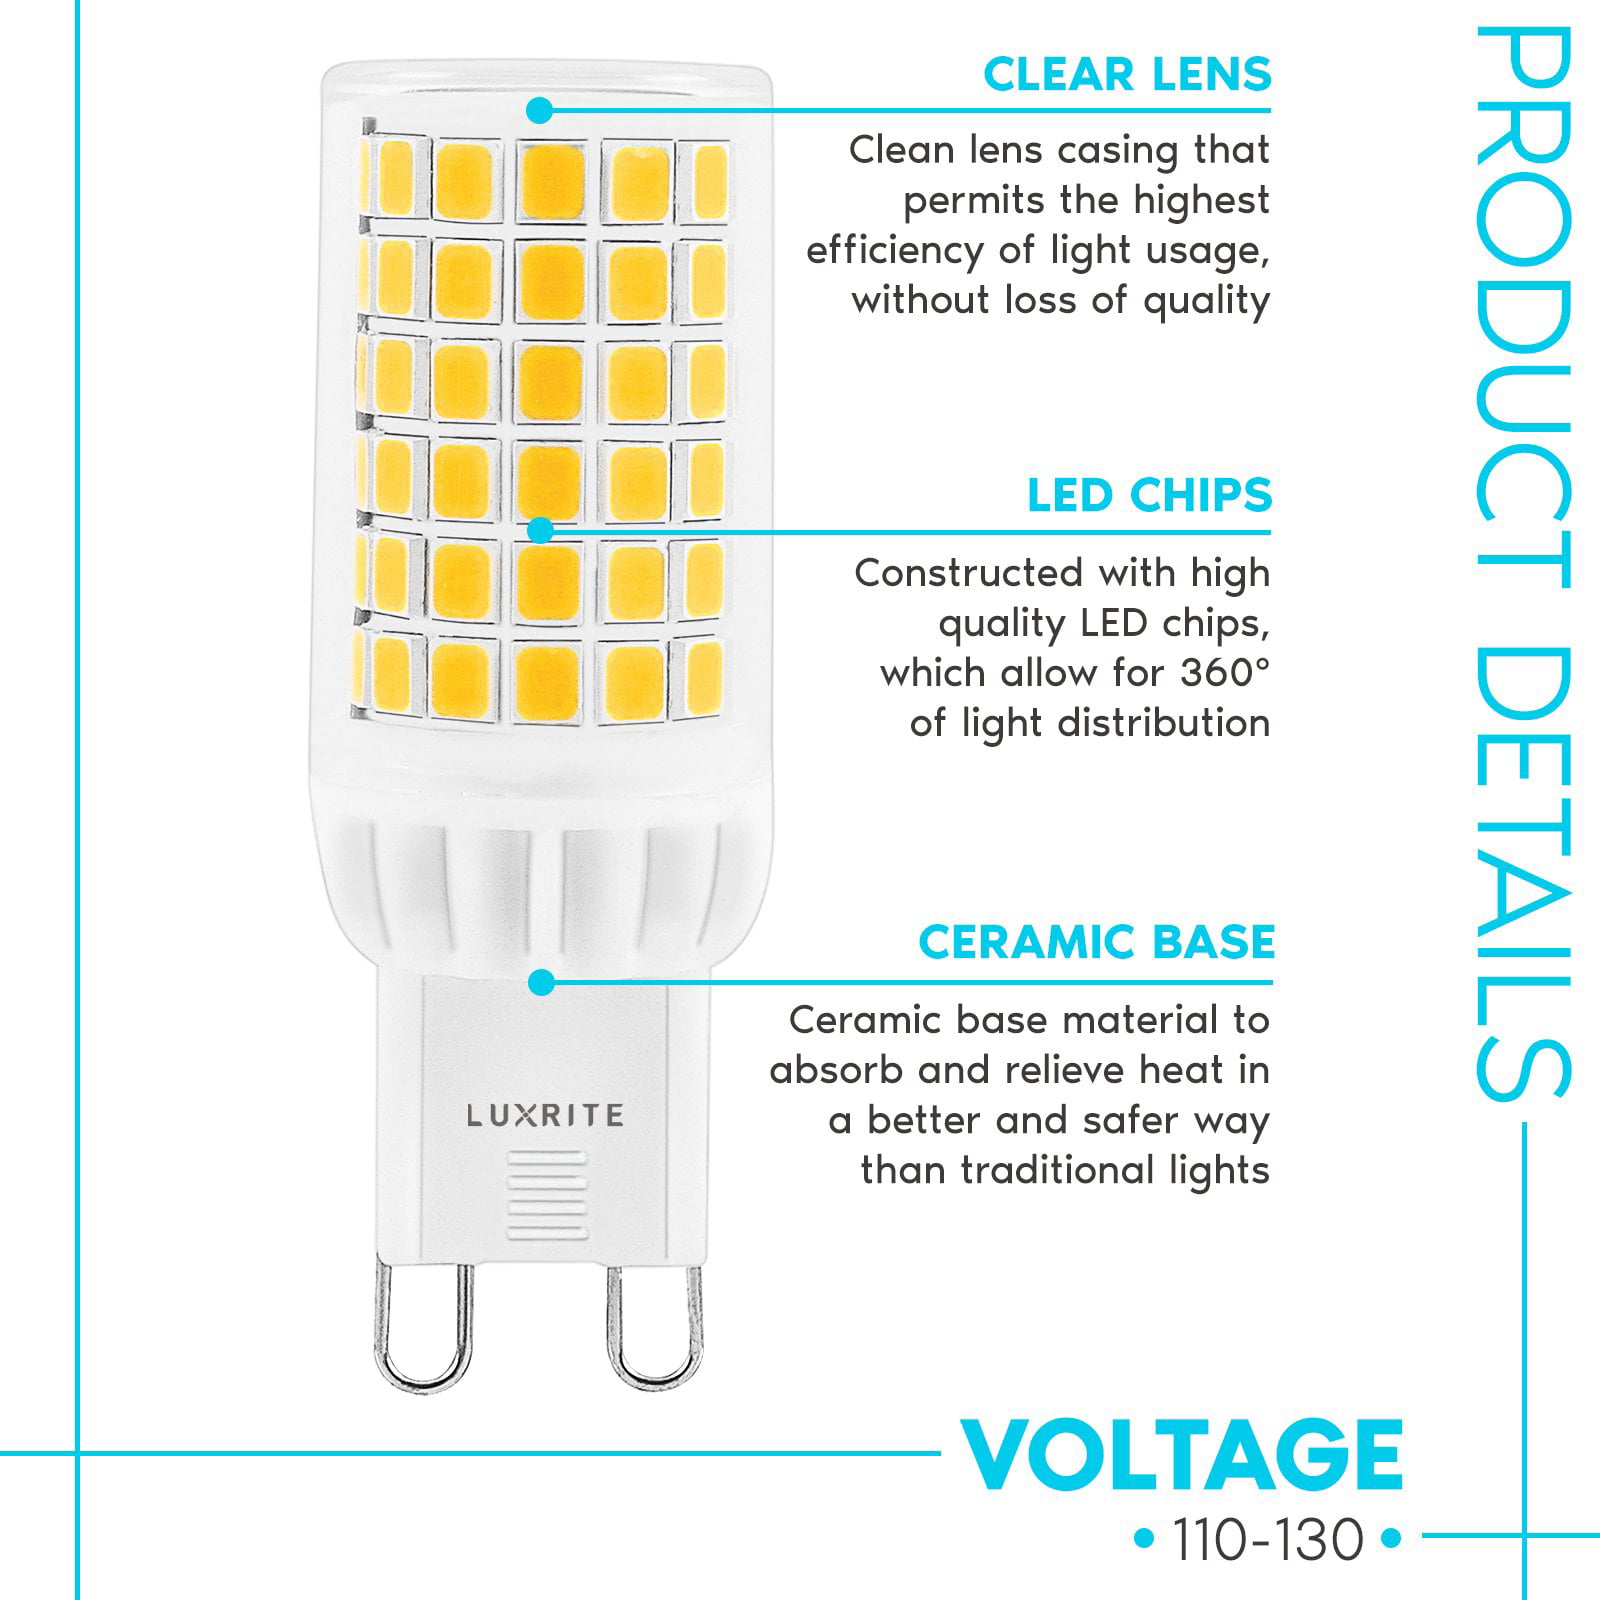 ELECTROLUX / SMEG Lampe de four halogène G9 - 42W - Cardoso Shop